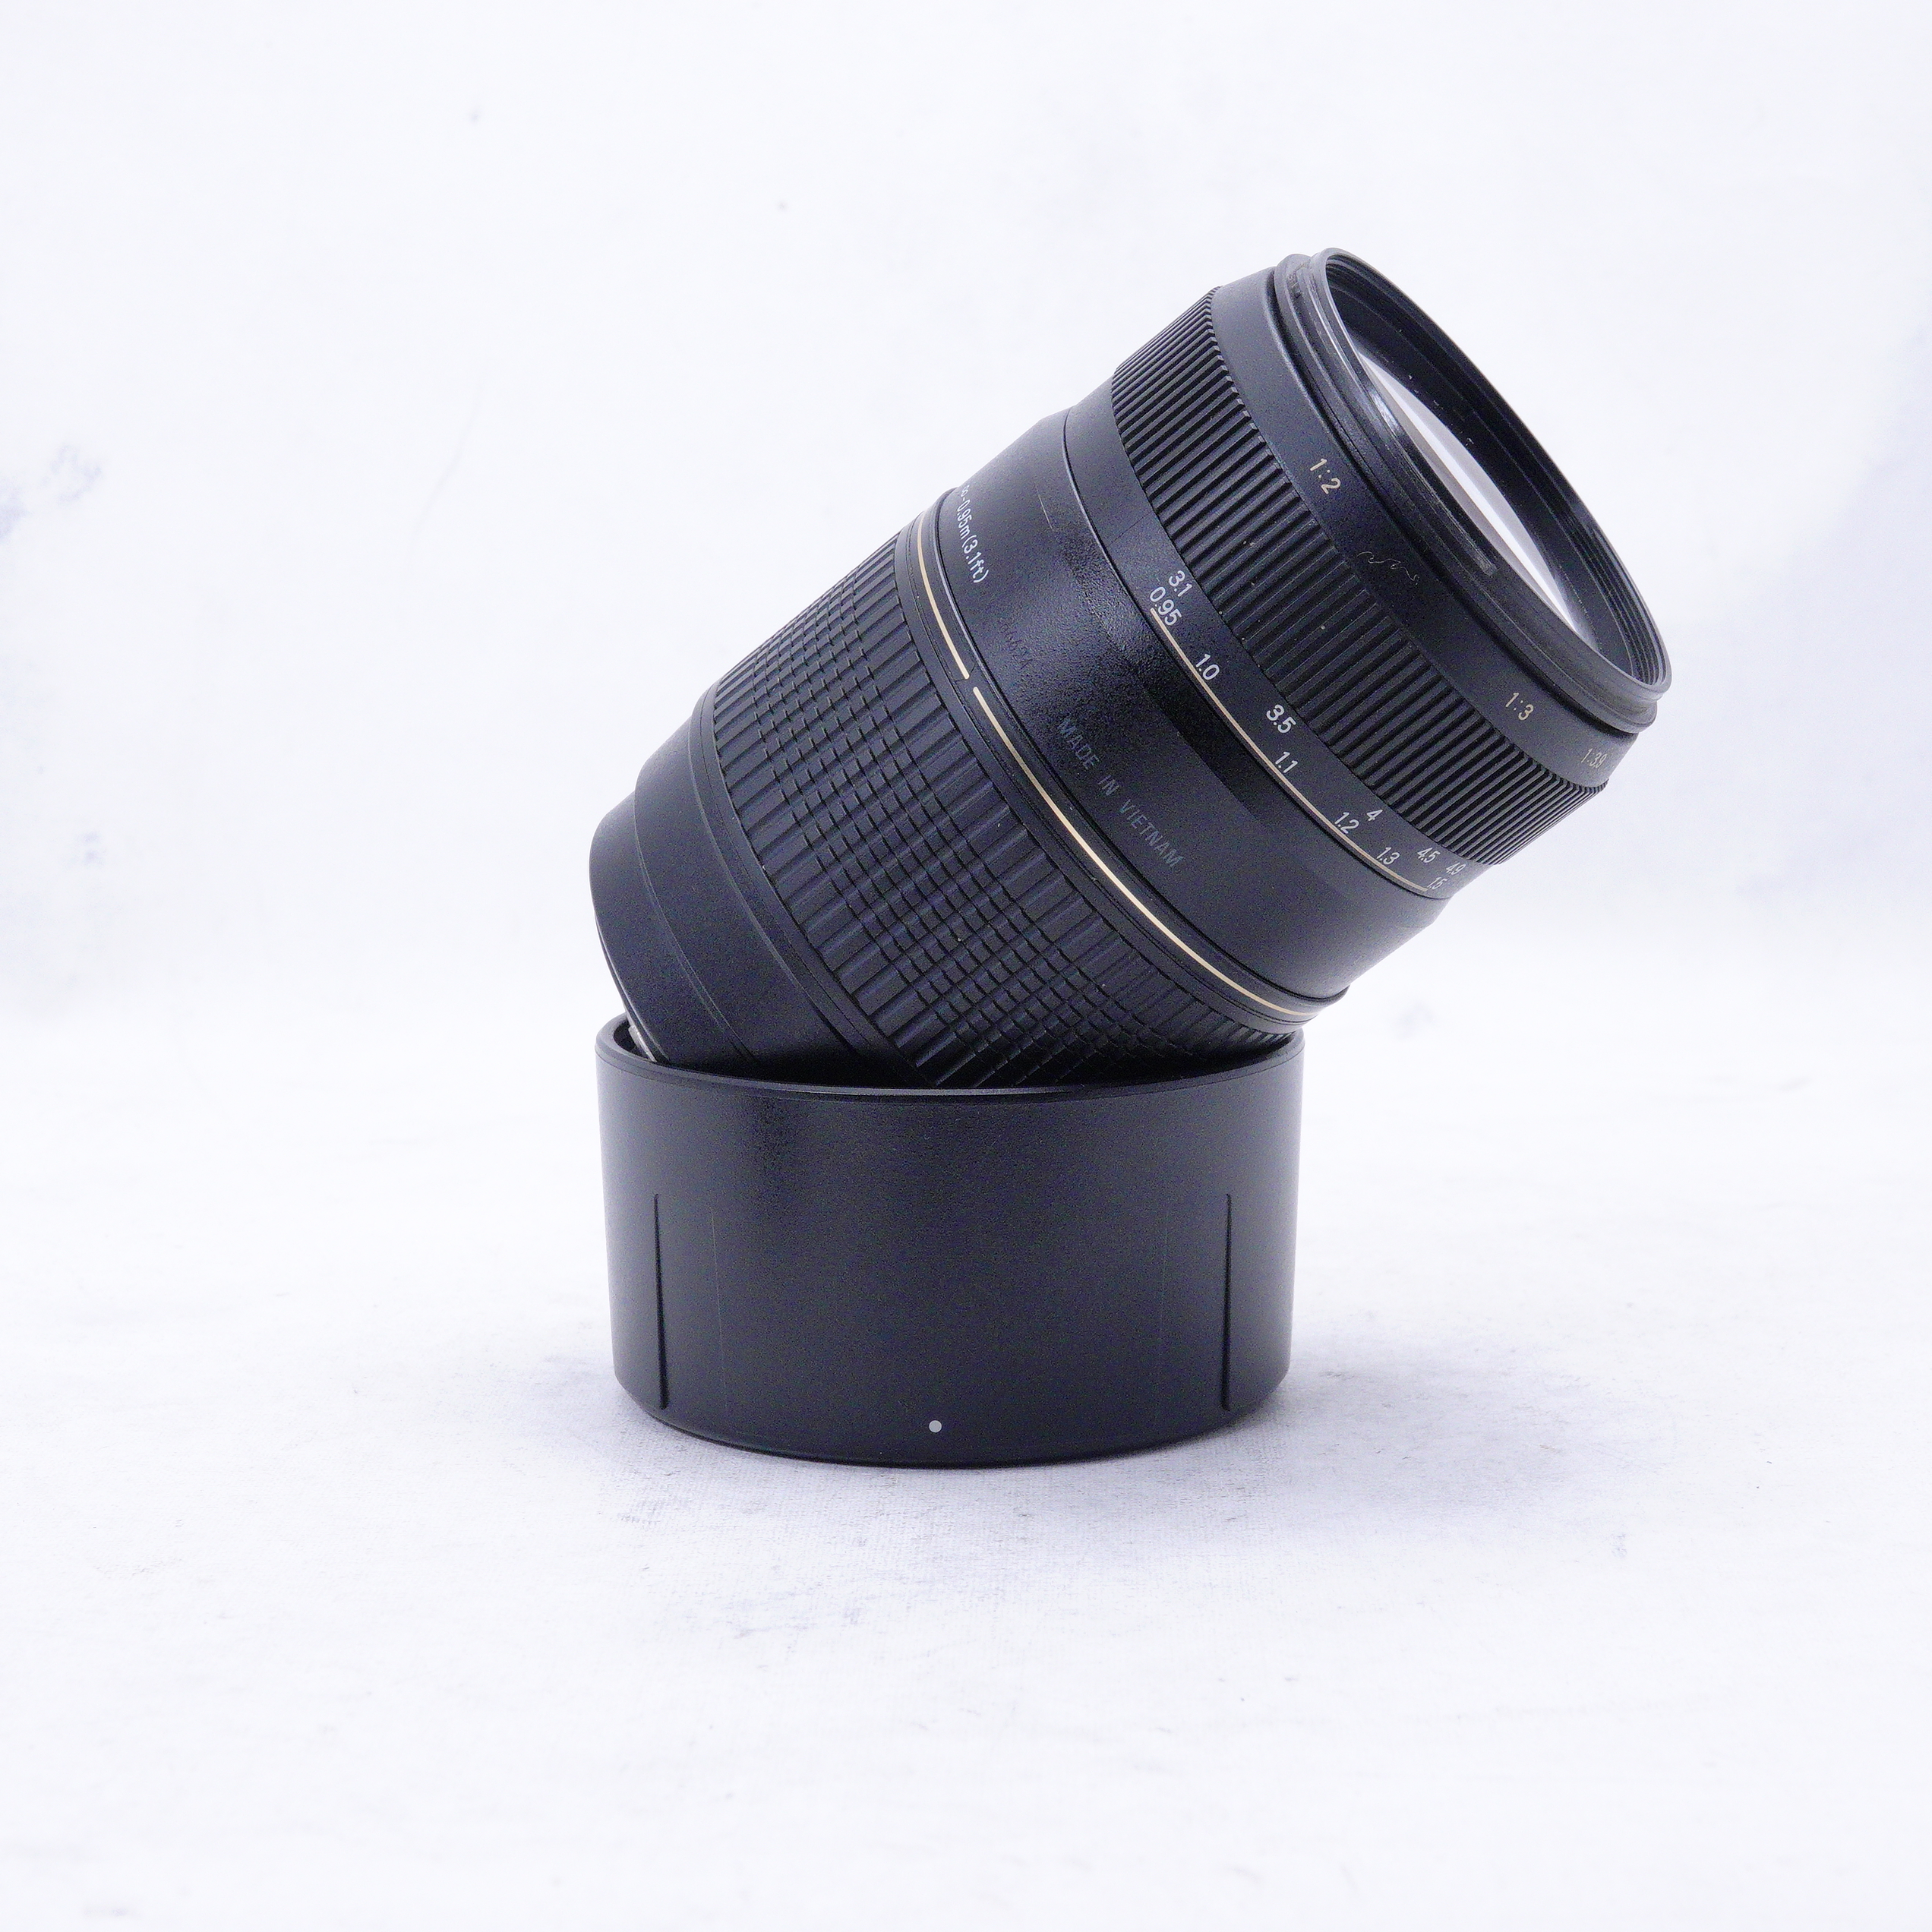 Tamron 70-300mm f / 4-5.6 Di LD Macro Enfoque automático (Nikon F) - Usado